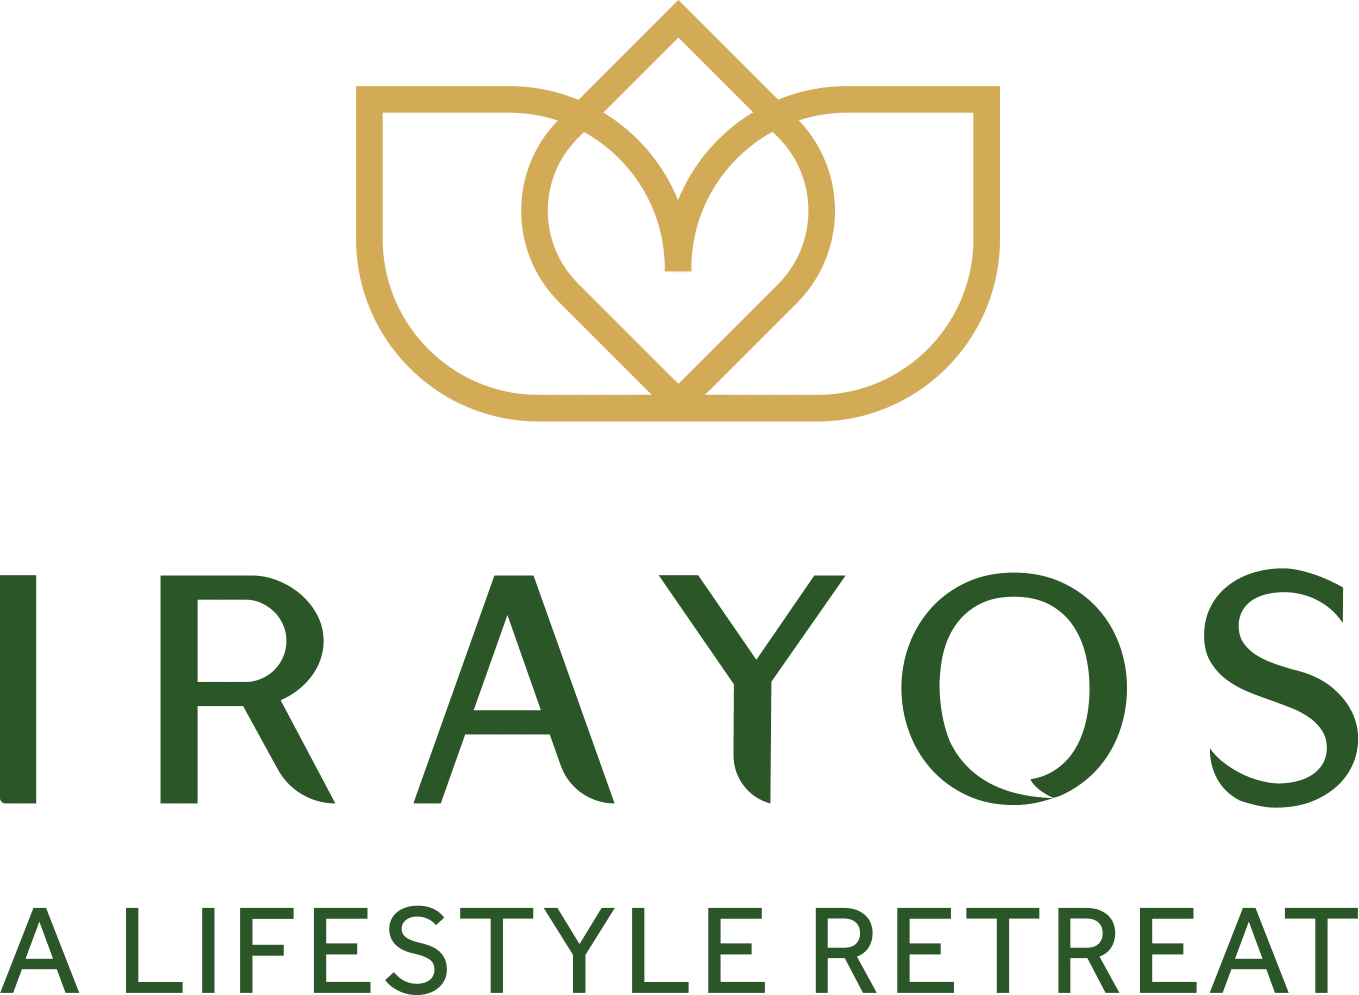 Irayos Lifestyle Retreat